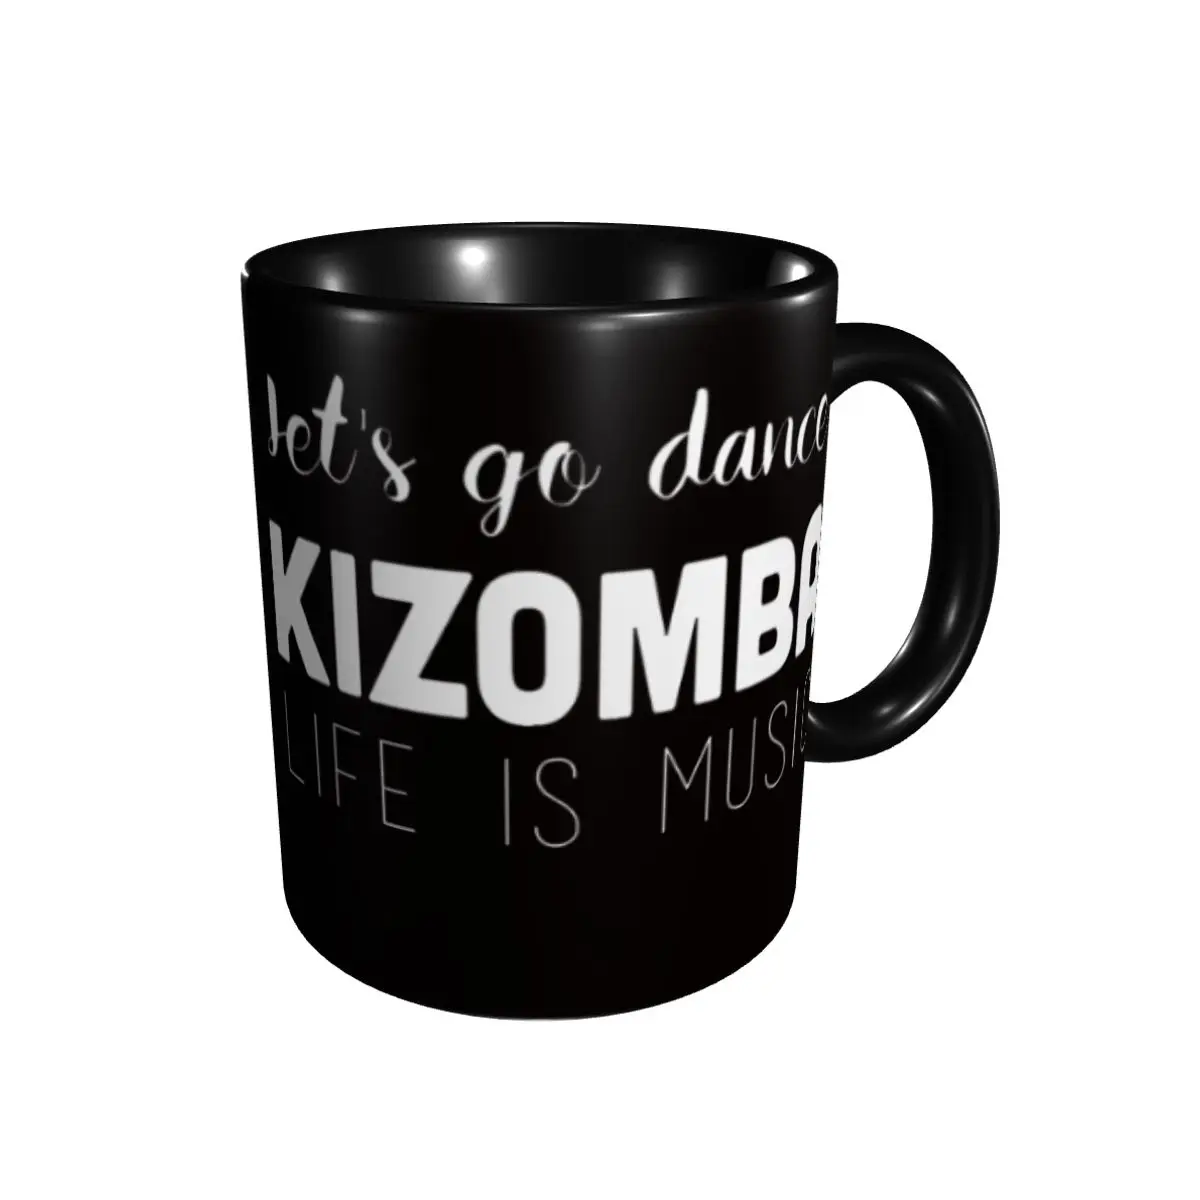 

Promo Let's Go Dance Kizomba Essential Mugs Graphic Cool Cups Mugs Print Humor Graphic R330 beer mugs